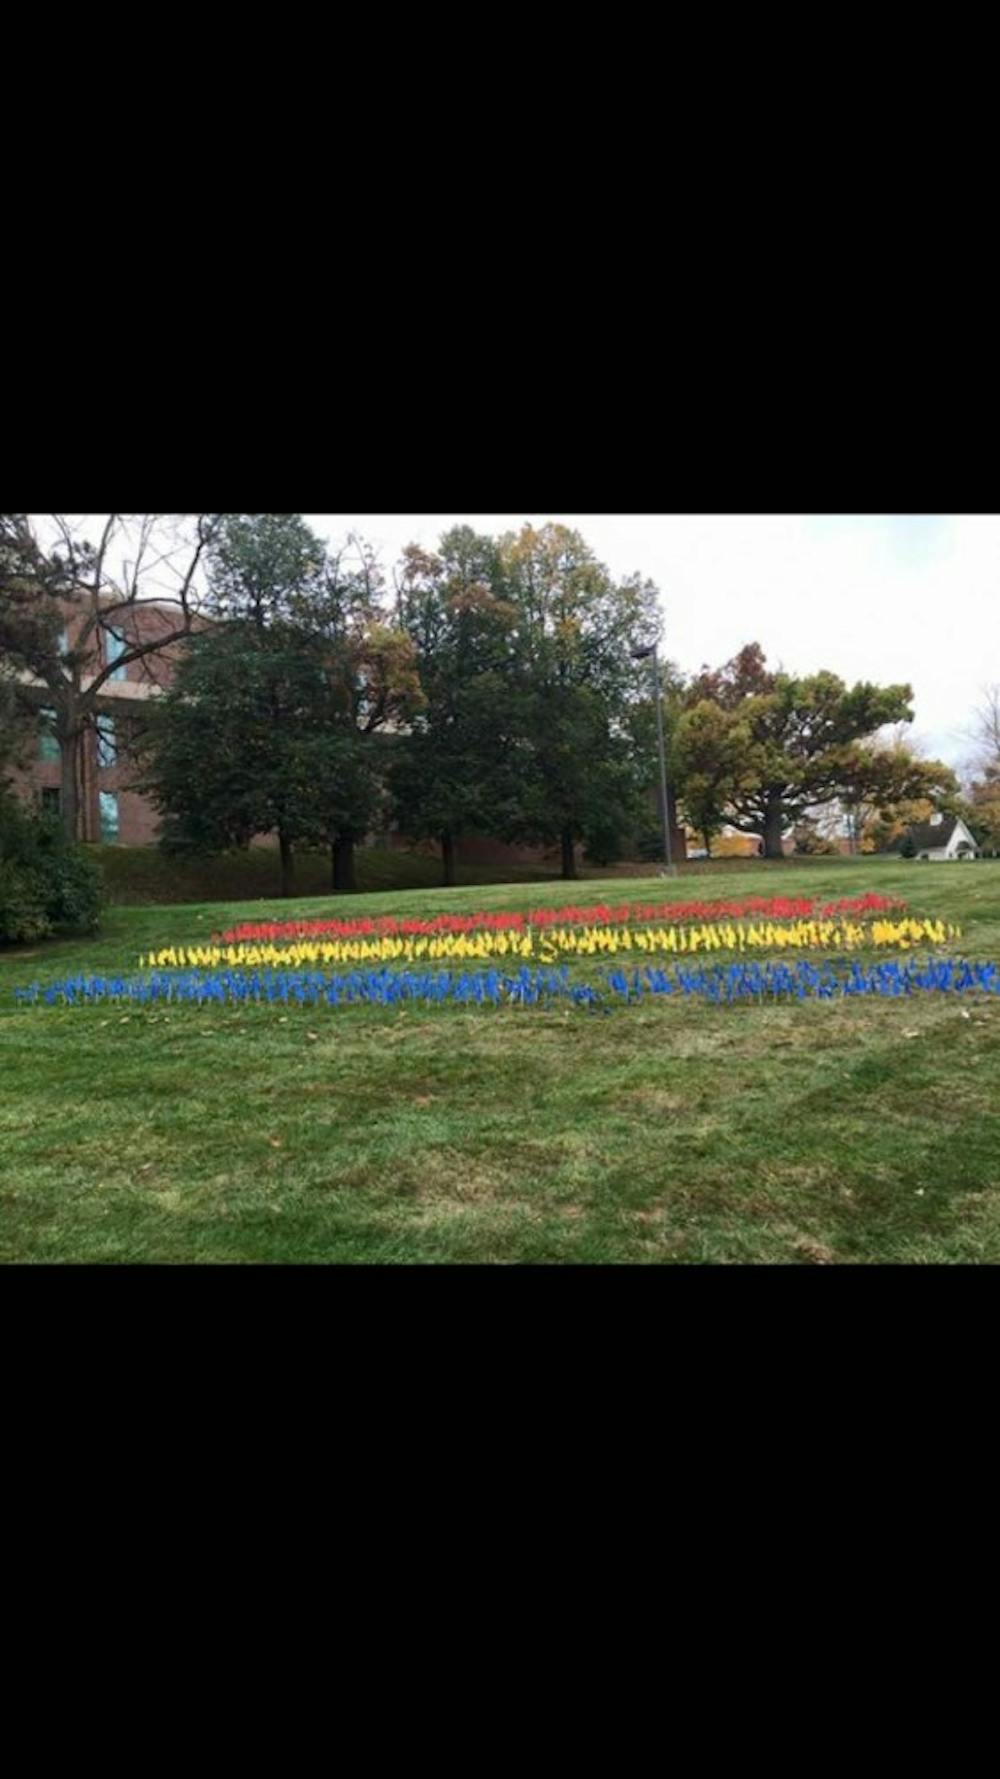 LGBT flag display defaced